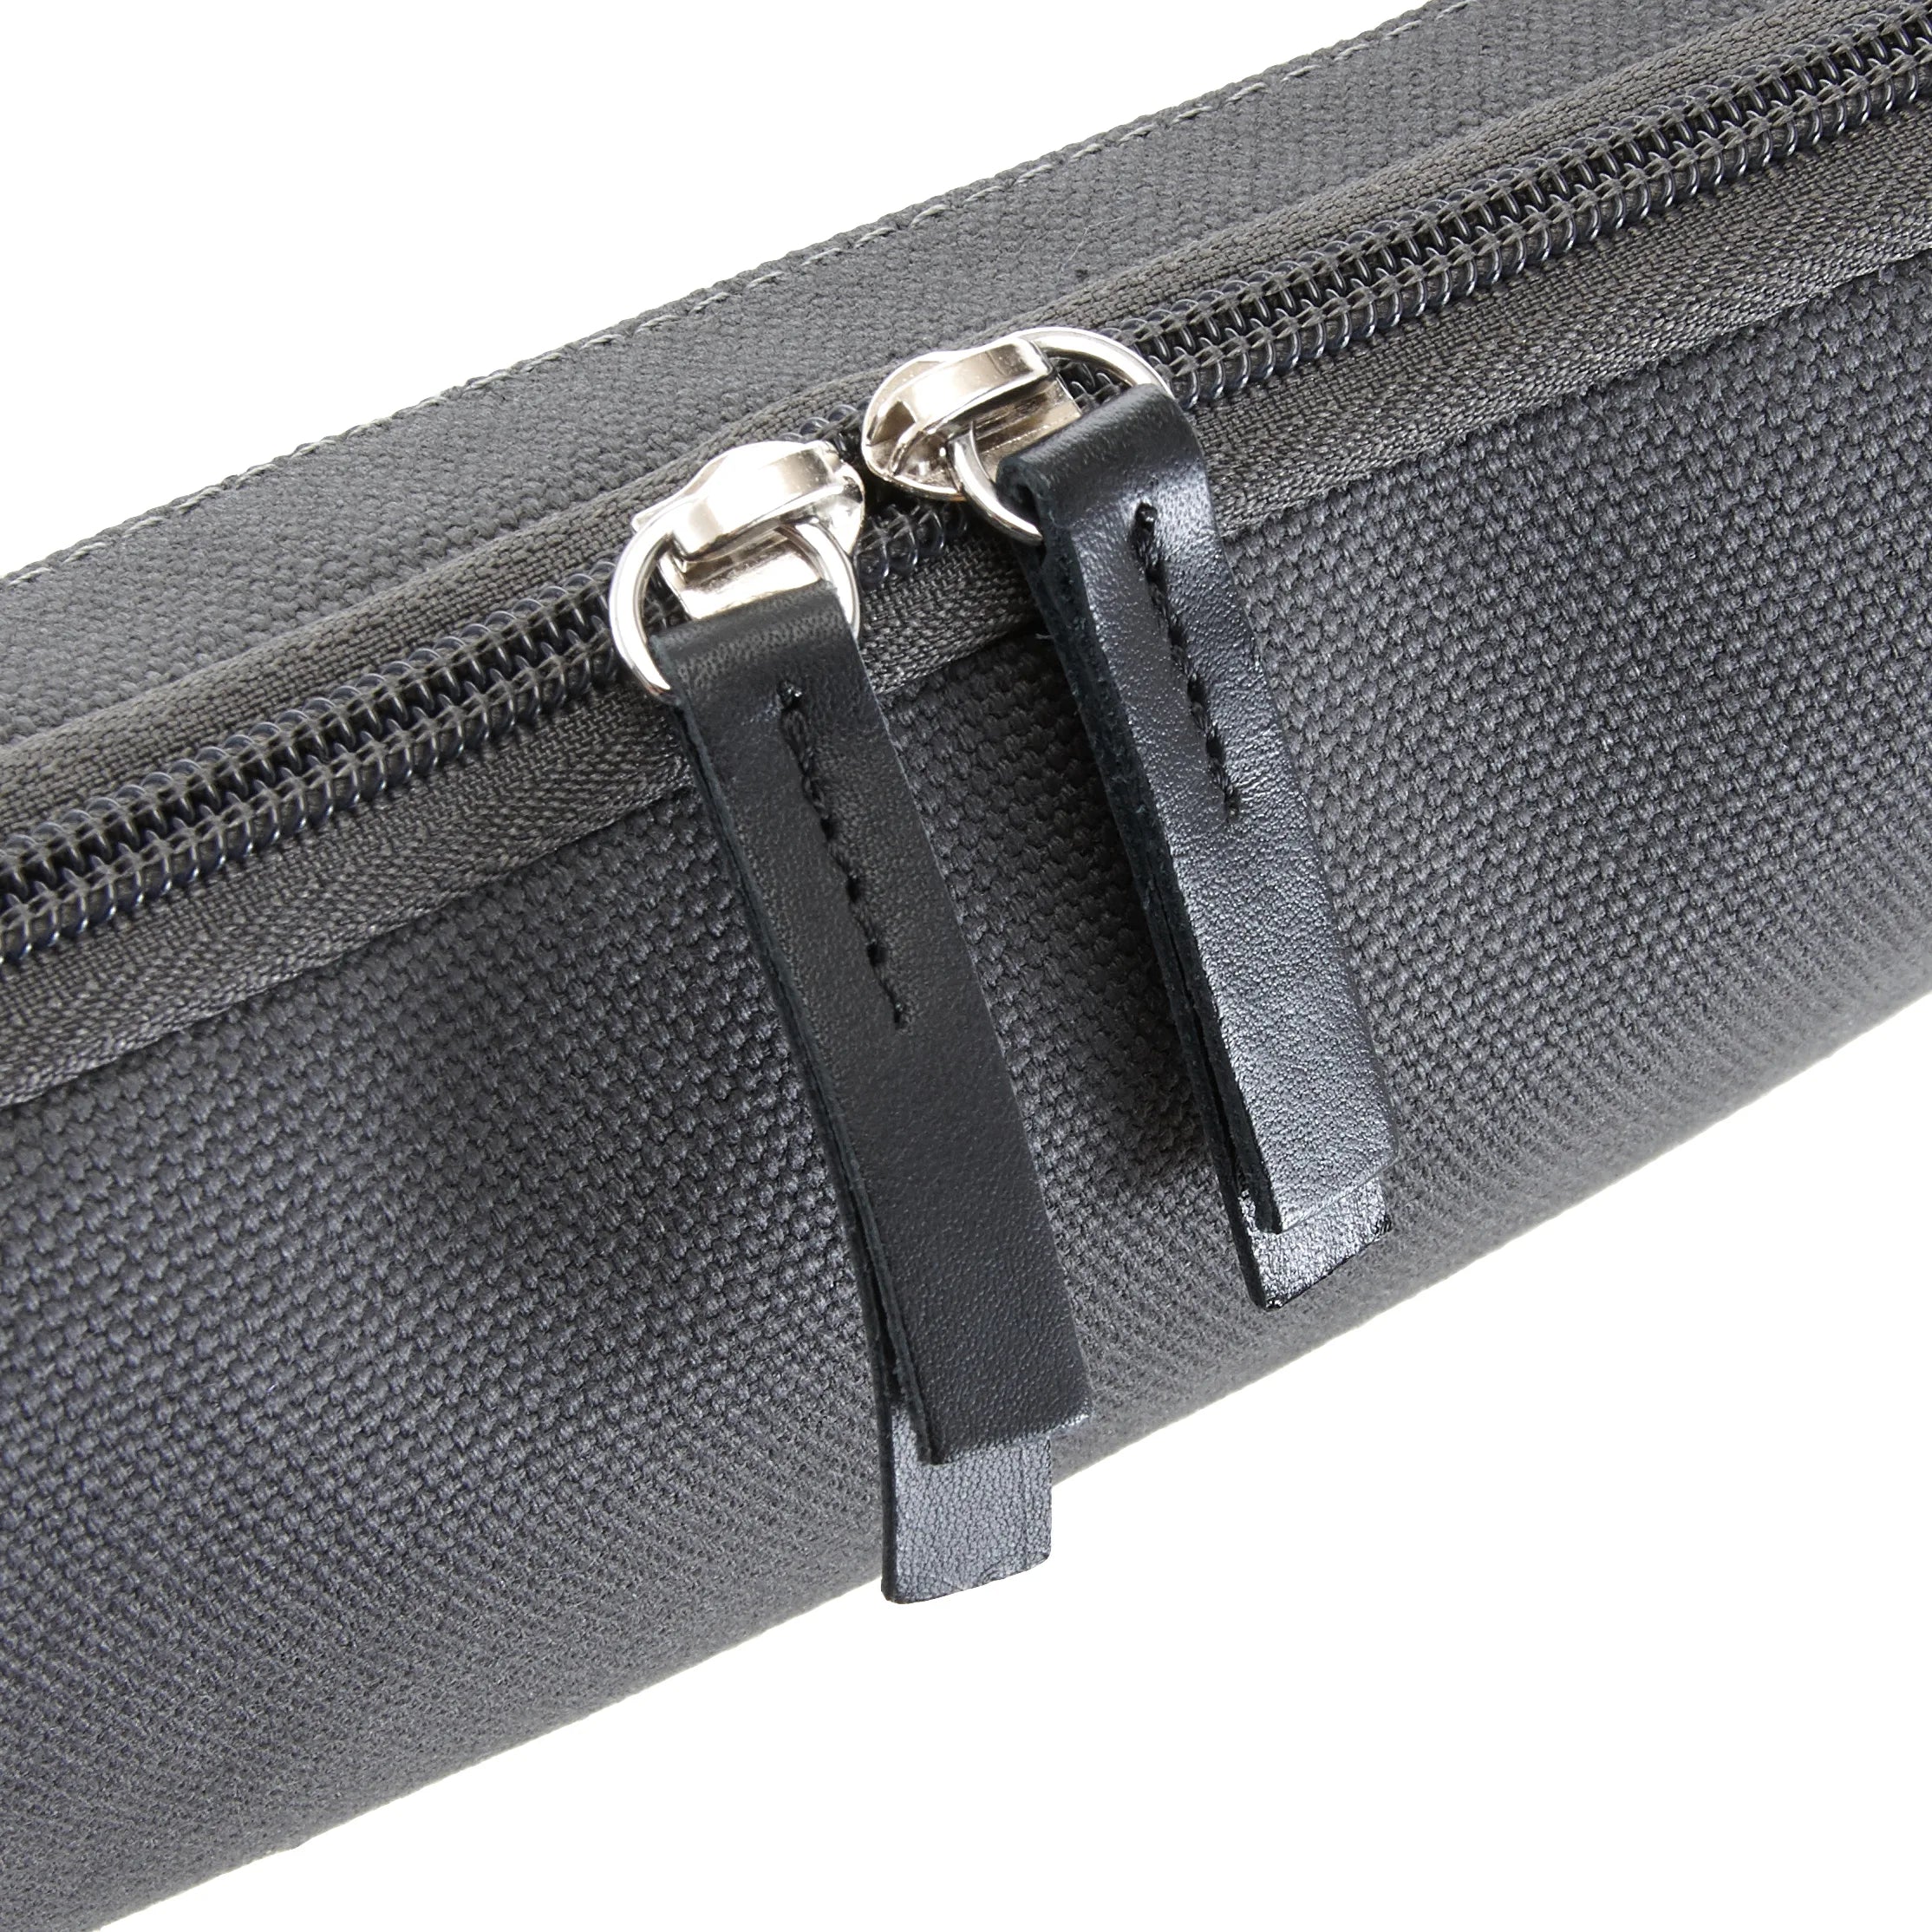 Jost Lund Crossover Bag 28 cm - black